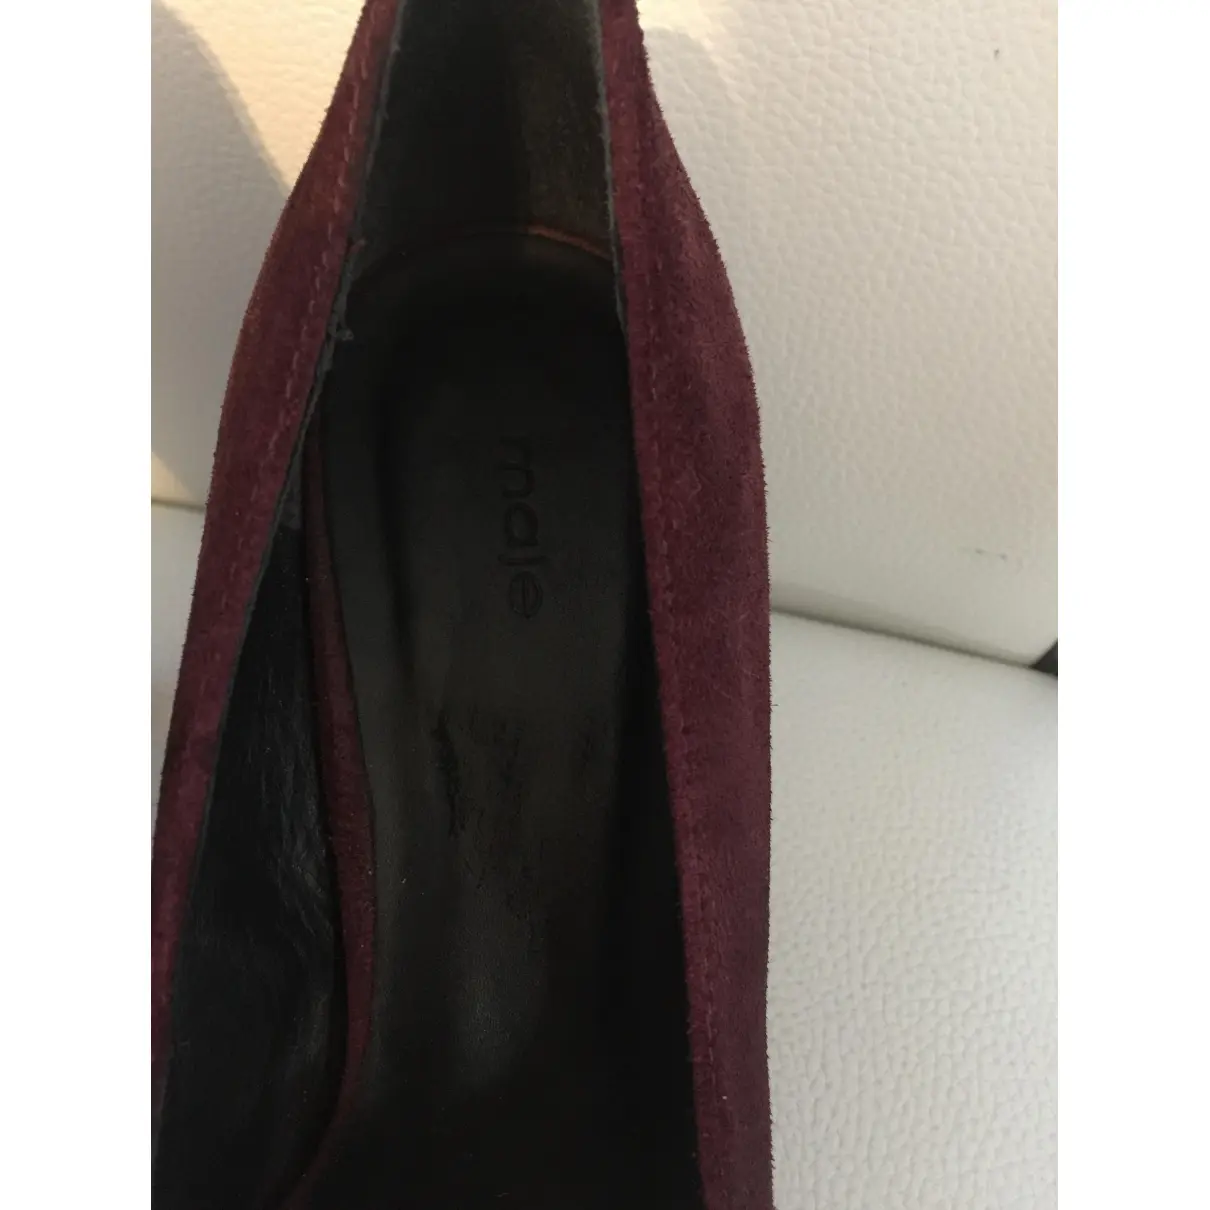 Buy Maje Leather heels online